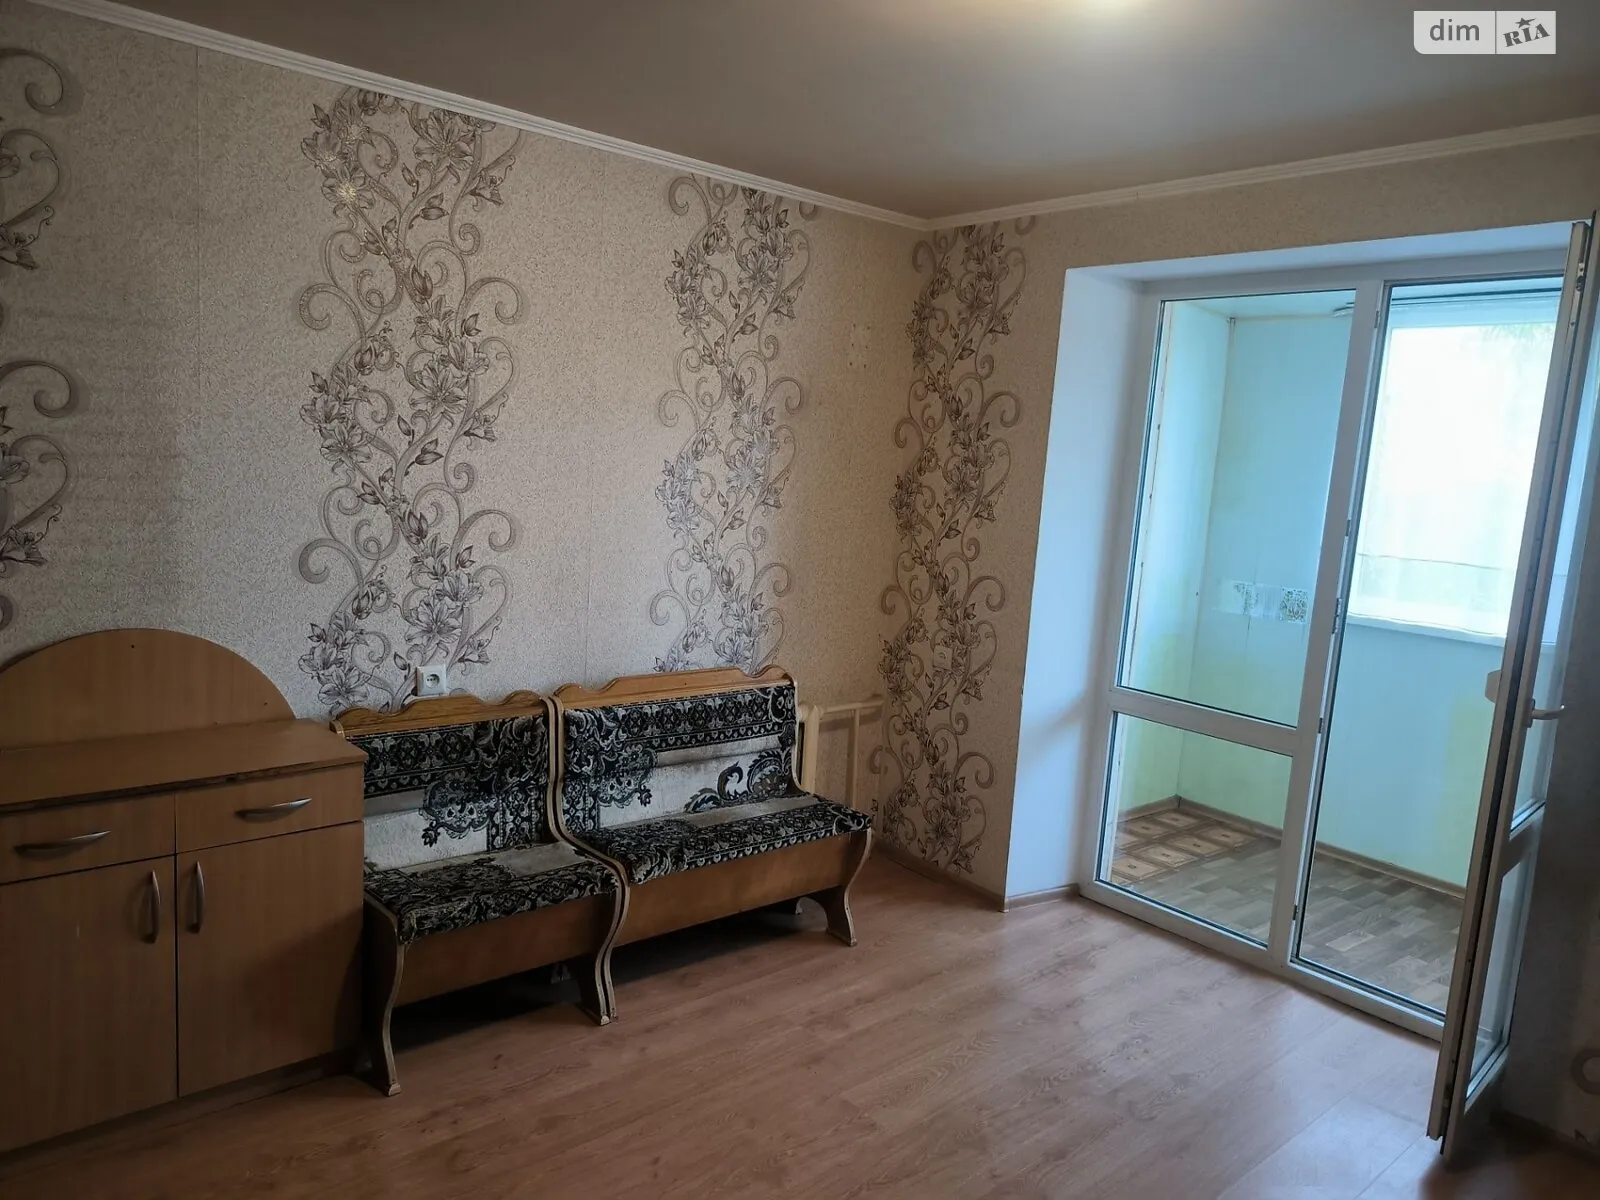 Продается комната 24.5 кв. м в Ровно - фото 2